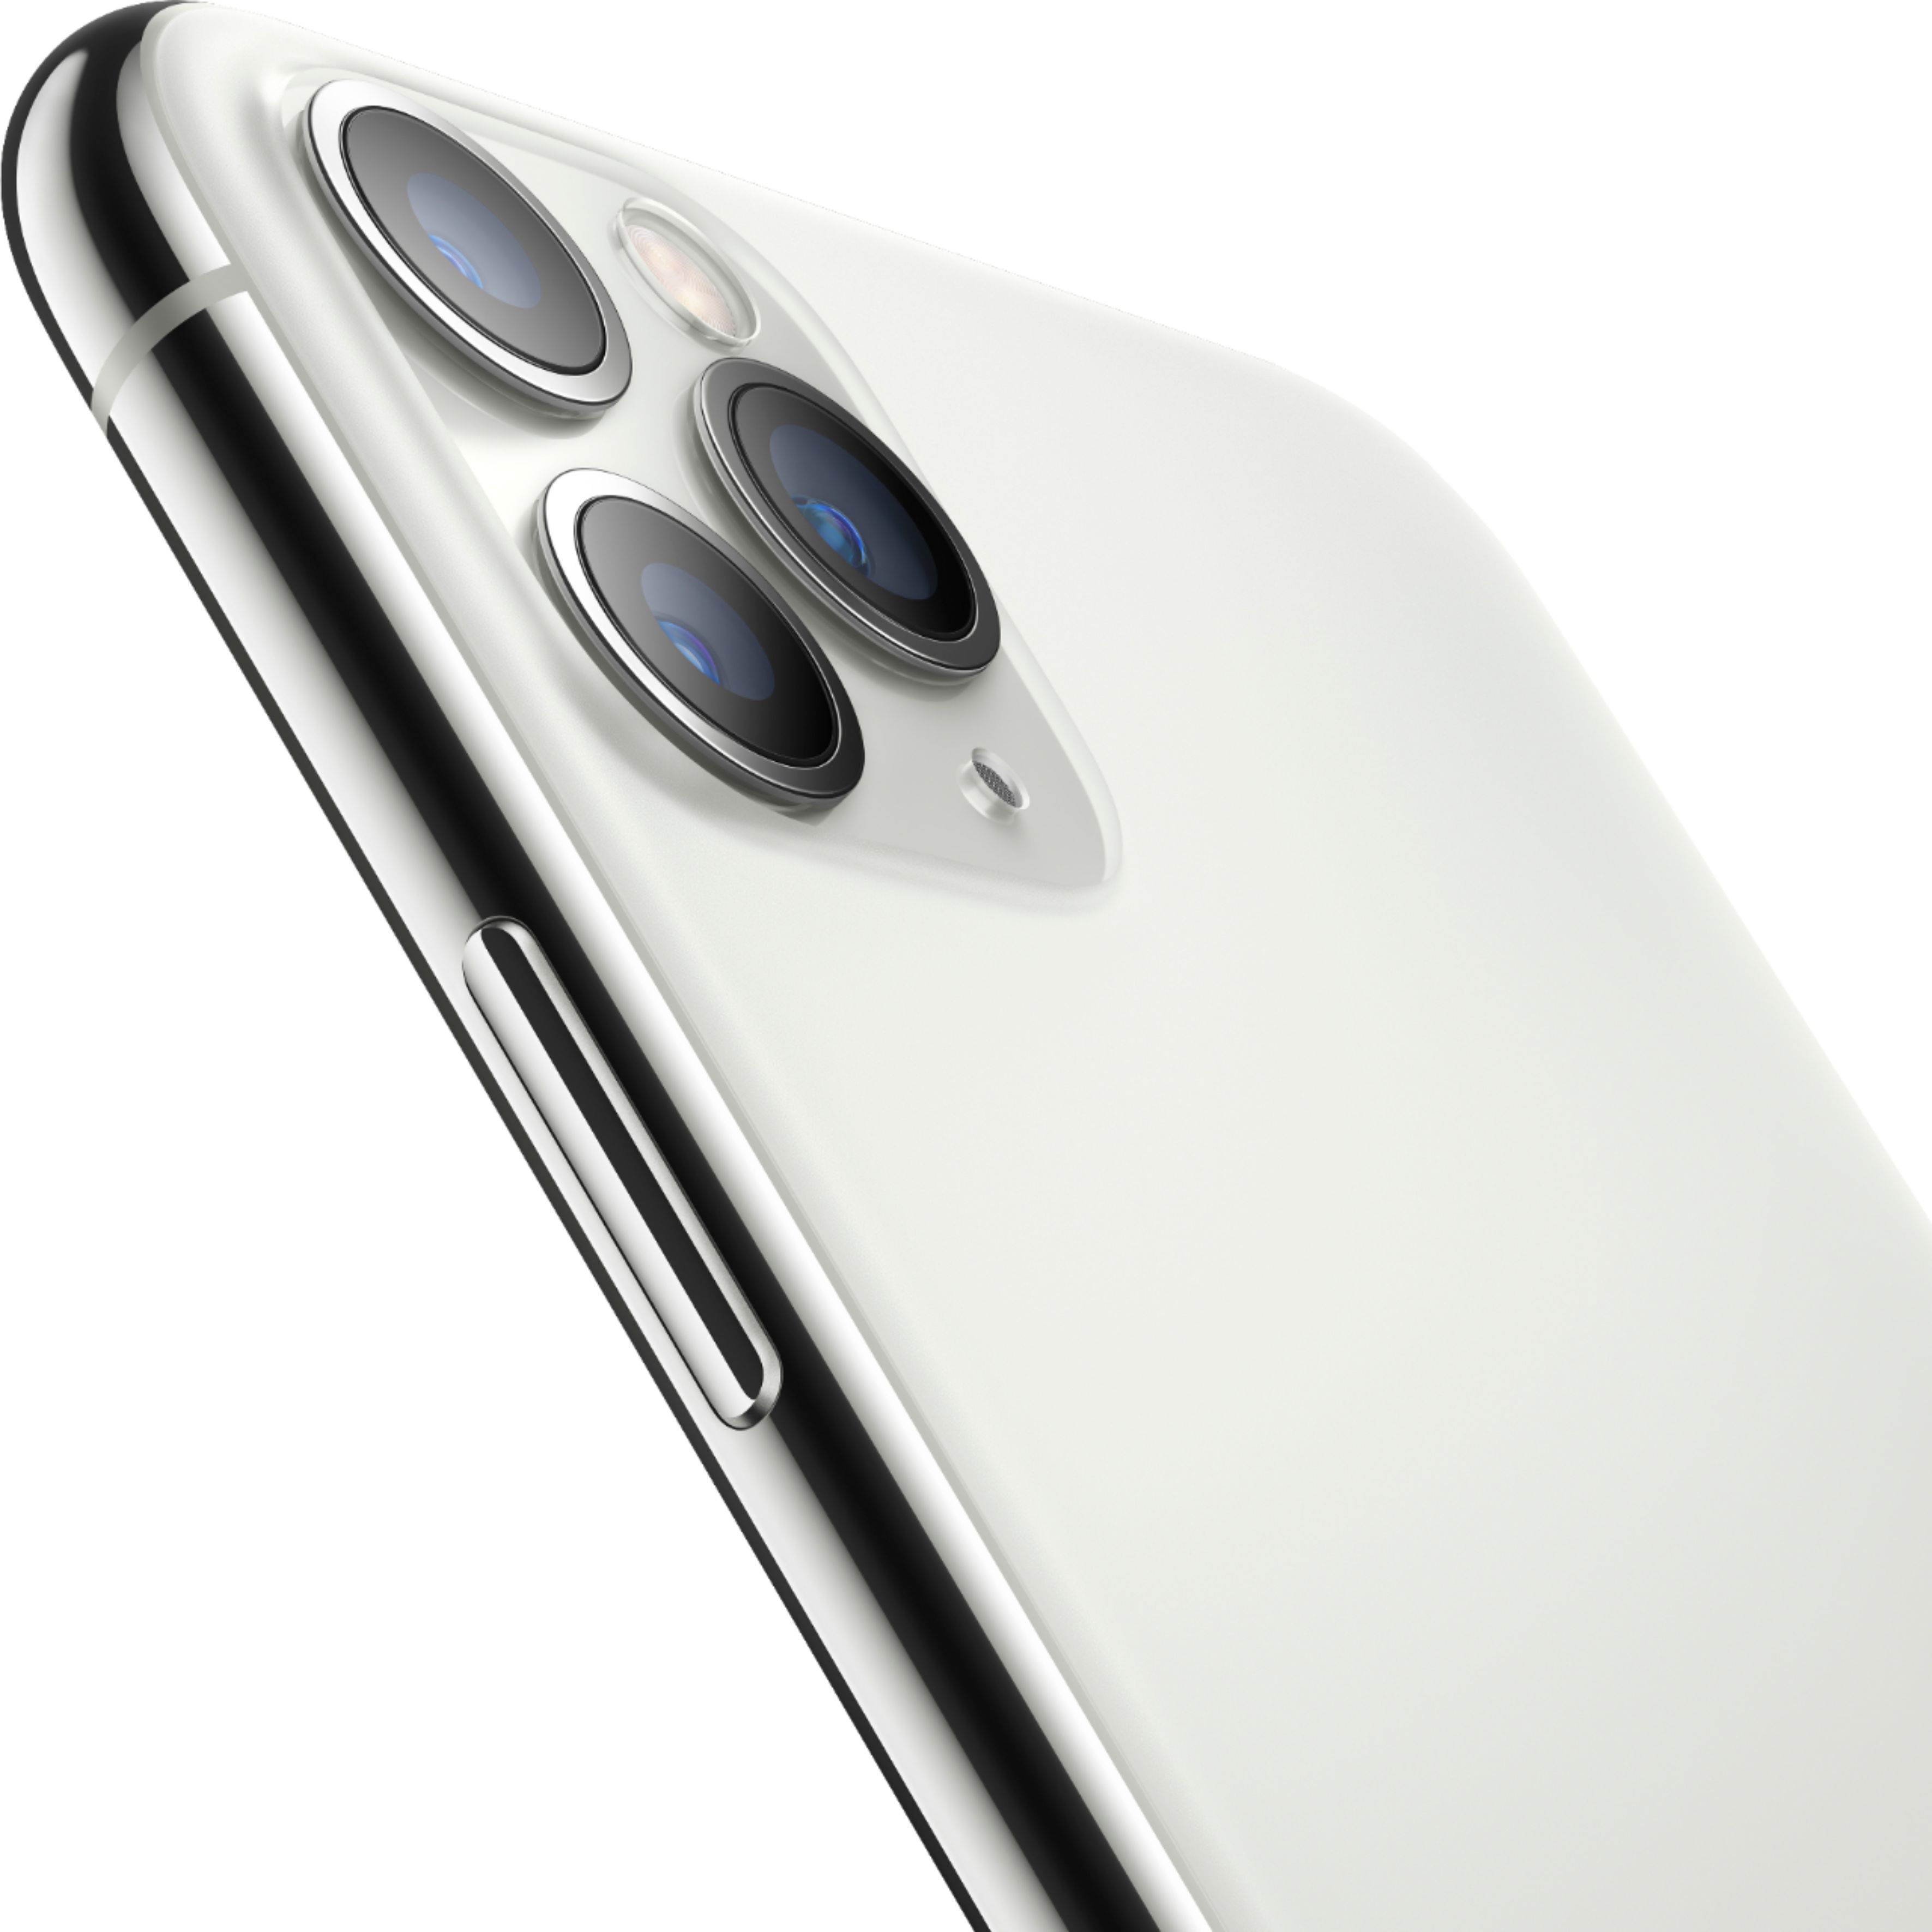 Apple iPhone 11 Pro 64GB Silver (Sprint) MWCJ2LL/A - Best Buy